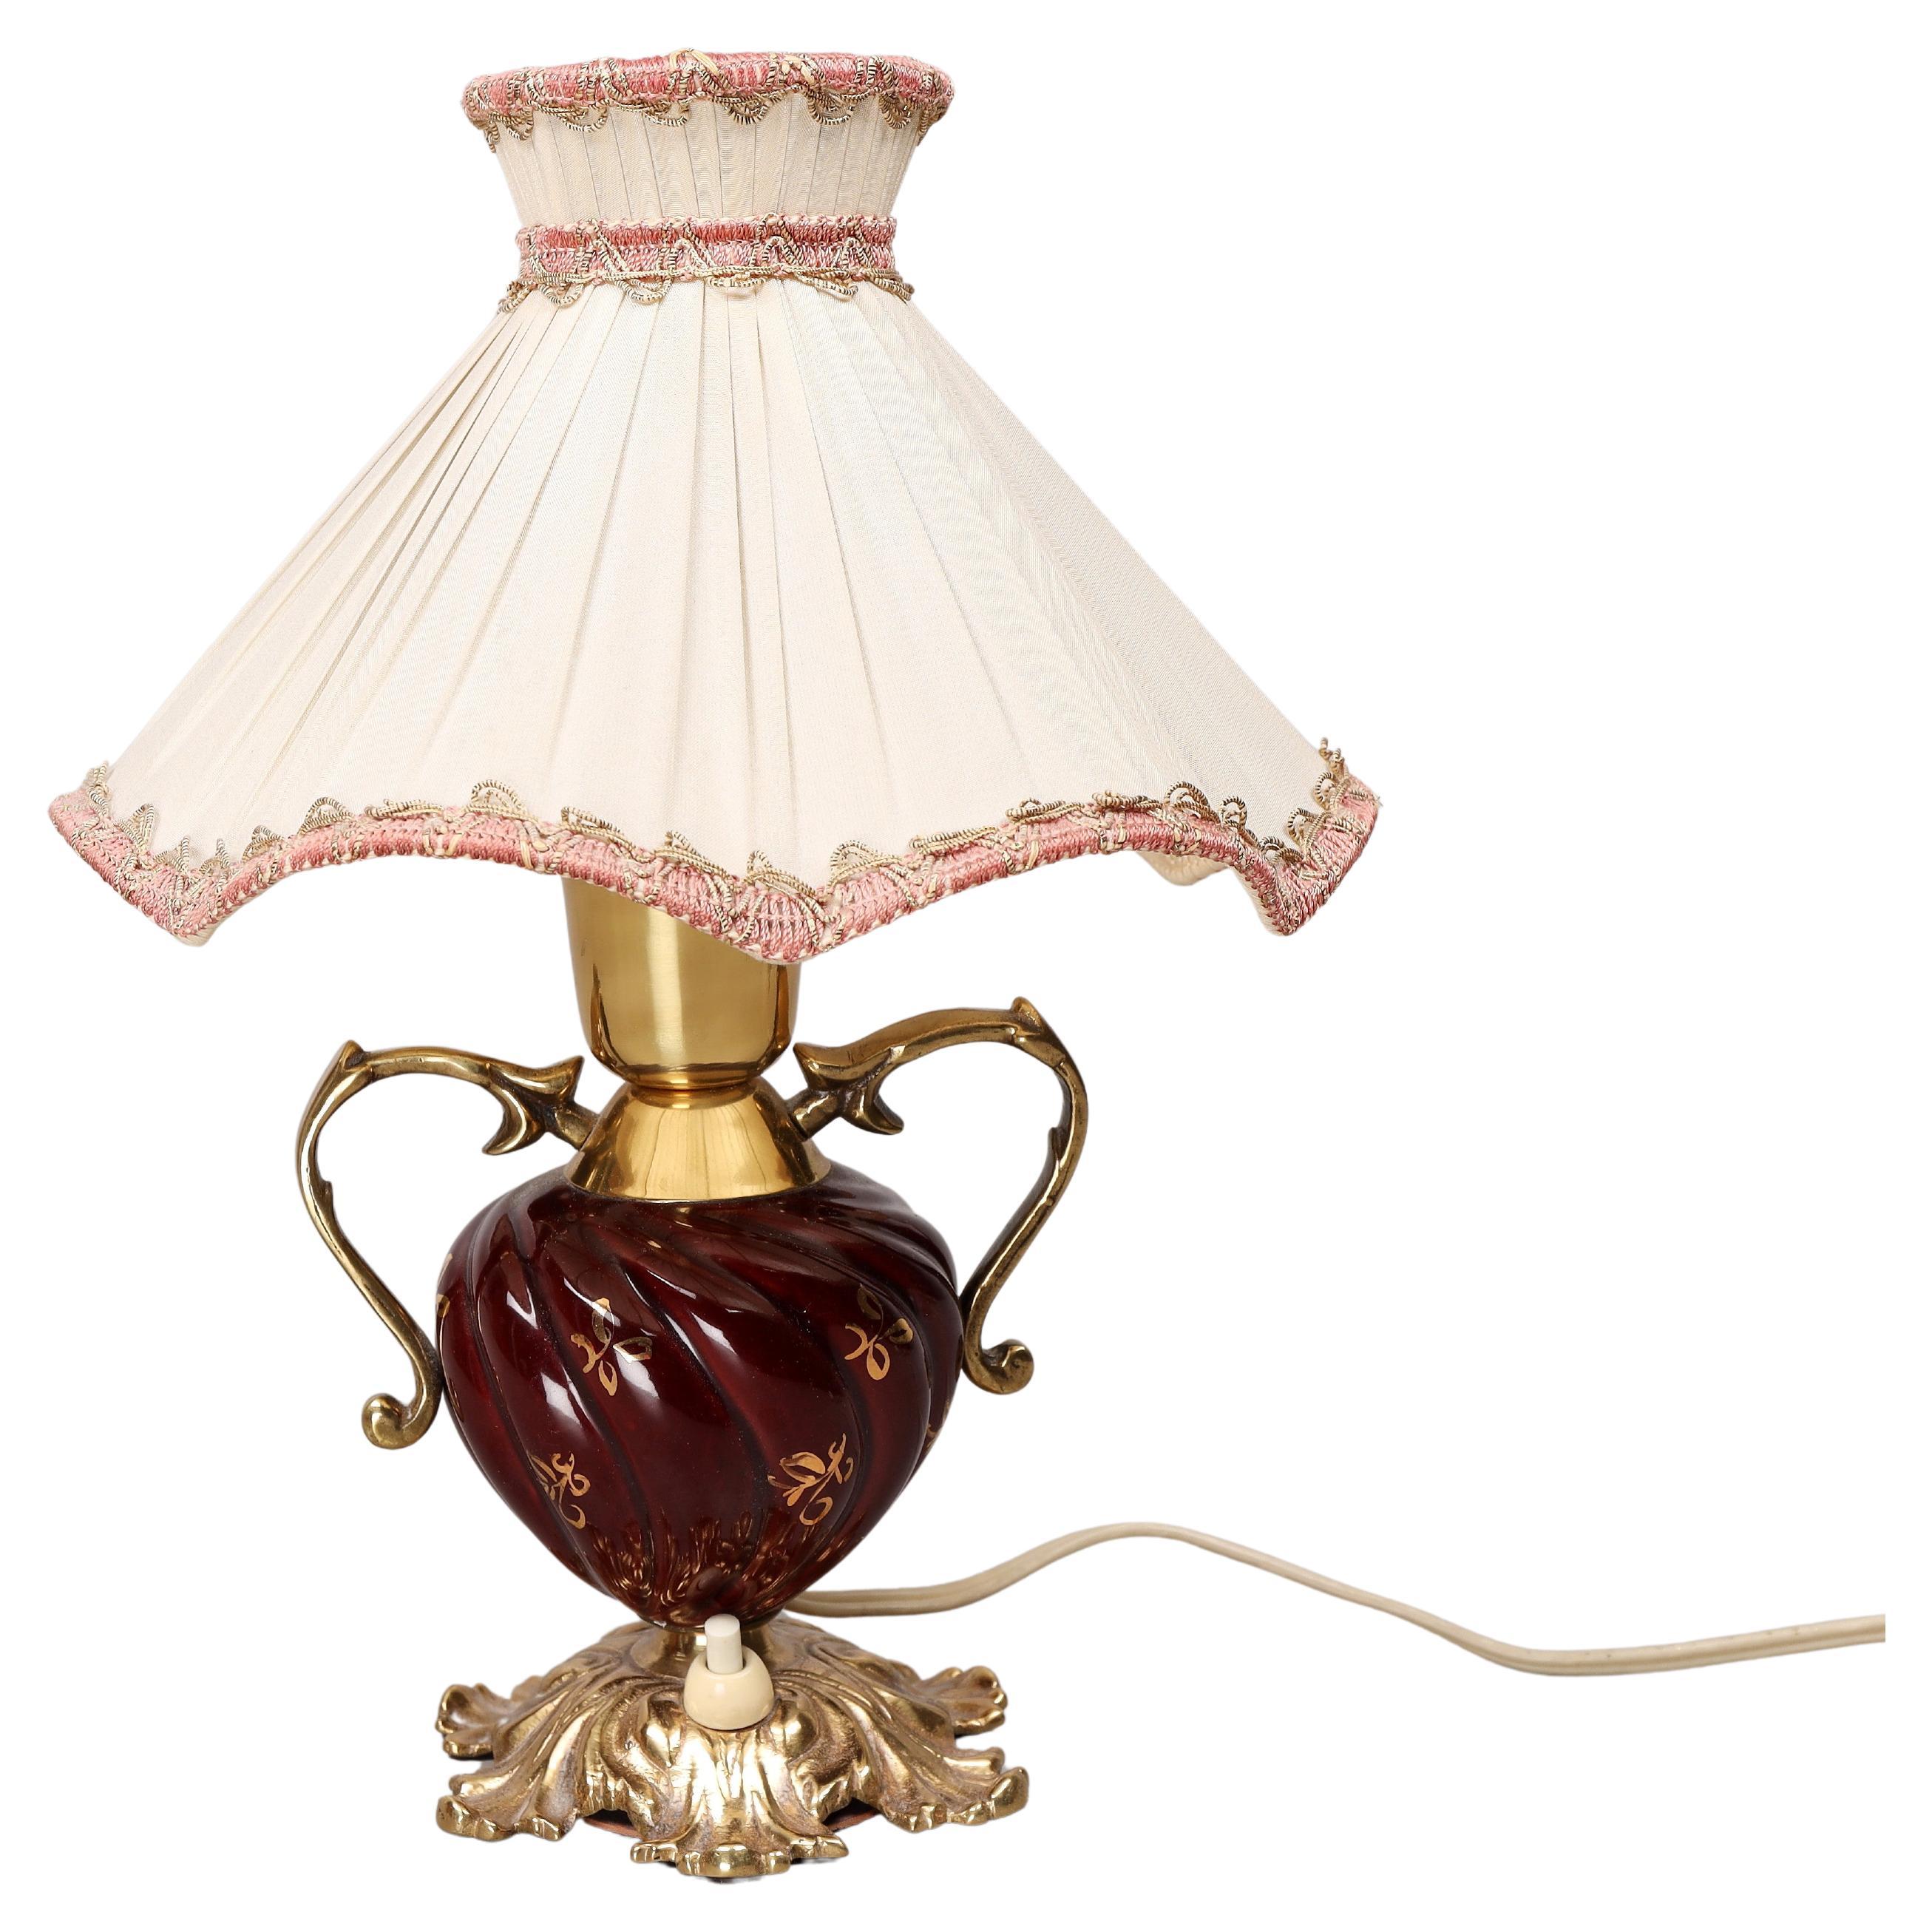 Antique TABLE LAMP Hollywood Regency brass Ceramic Classic Lamp EWÅ, Värnamo For Sale